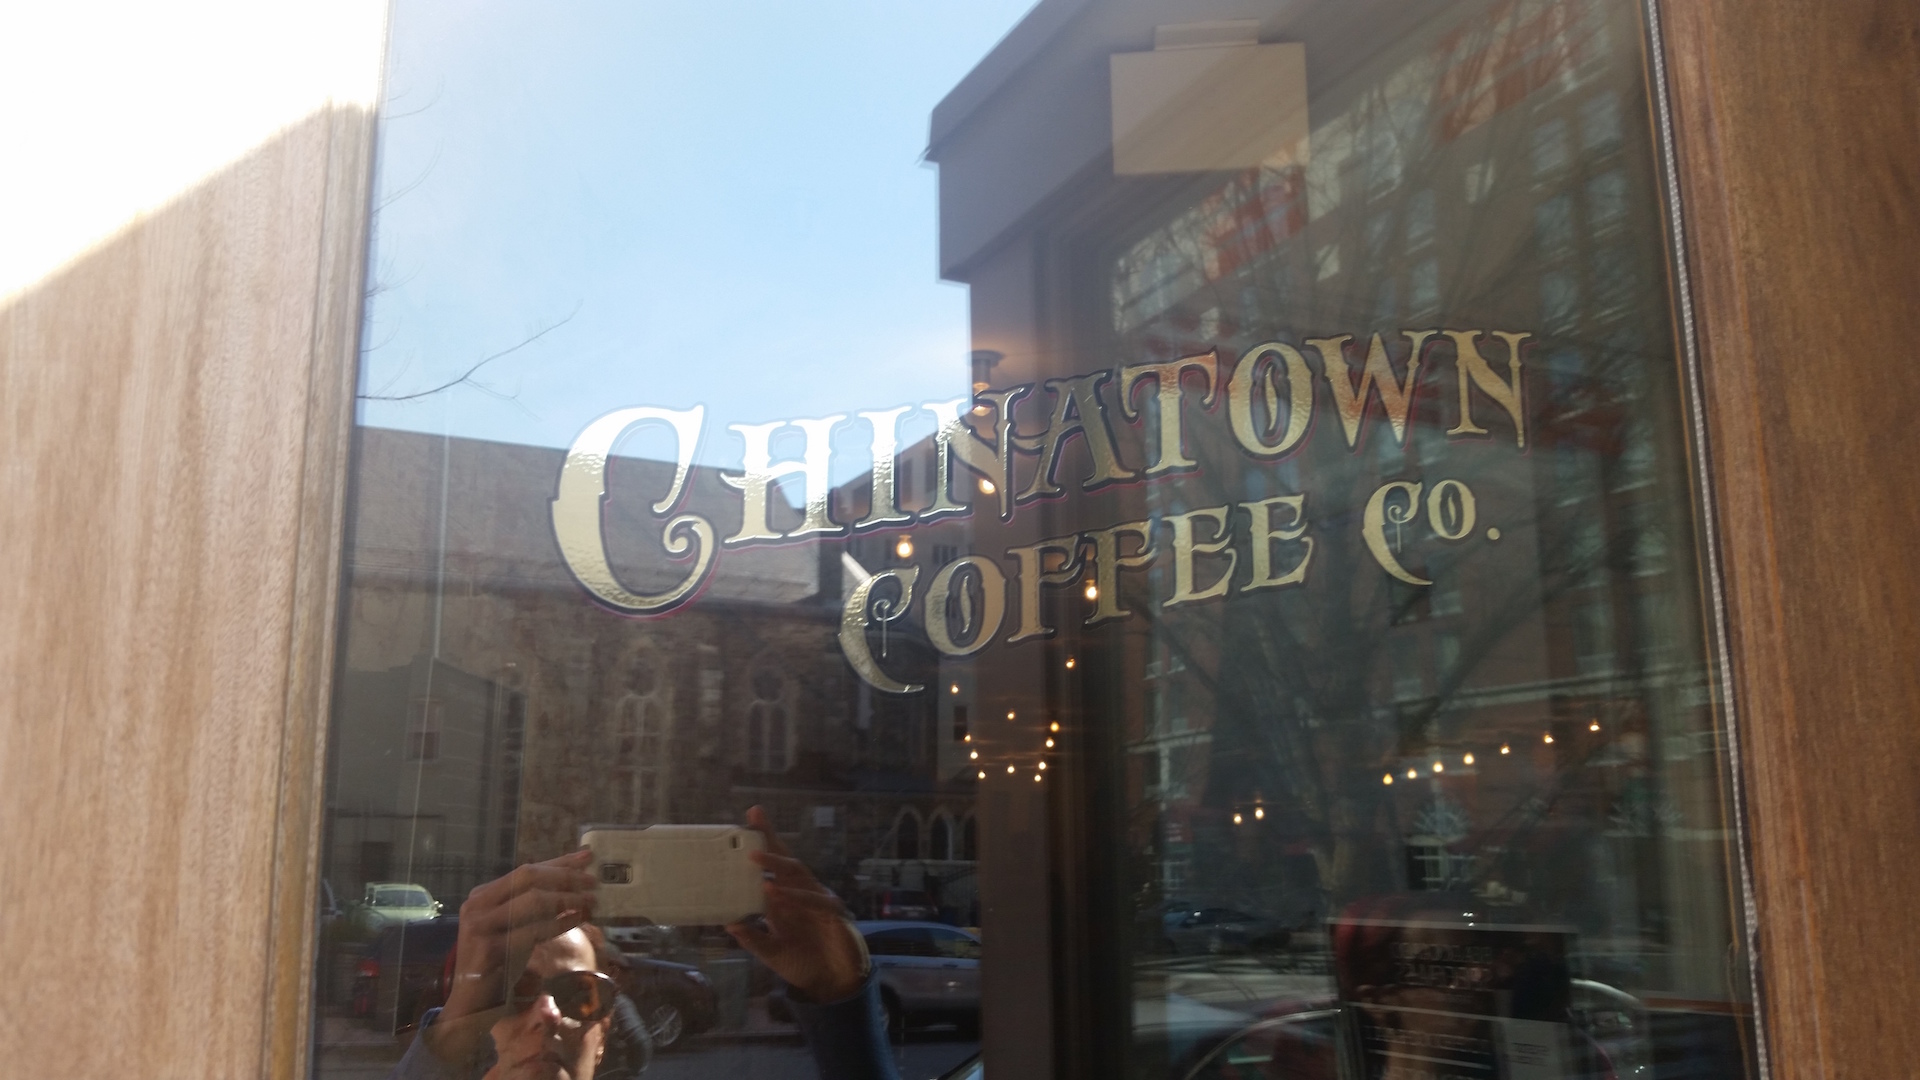 Chinatown-cofffe-window-sign-self-portrait